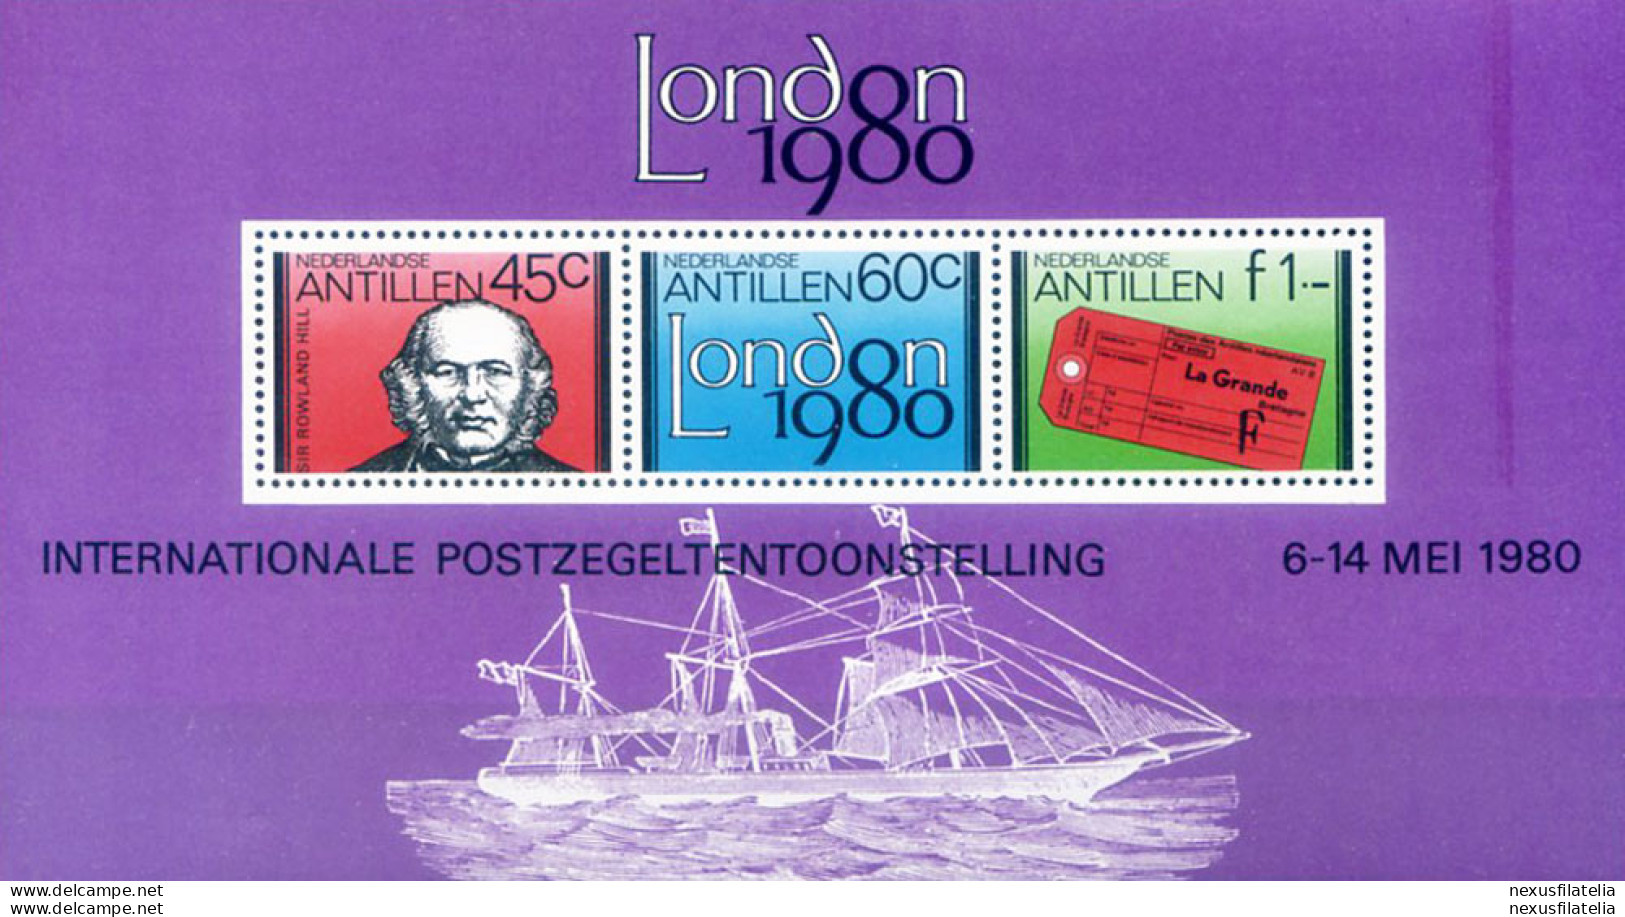 "London 1980". - Niederländische Antillen, Curaçao, Aruba